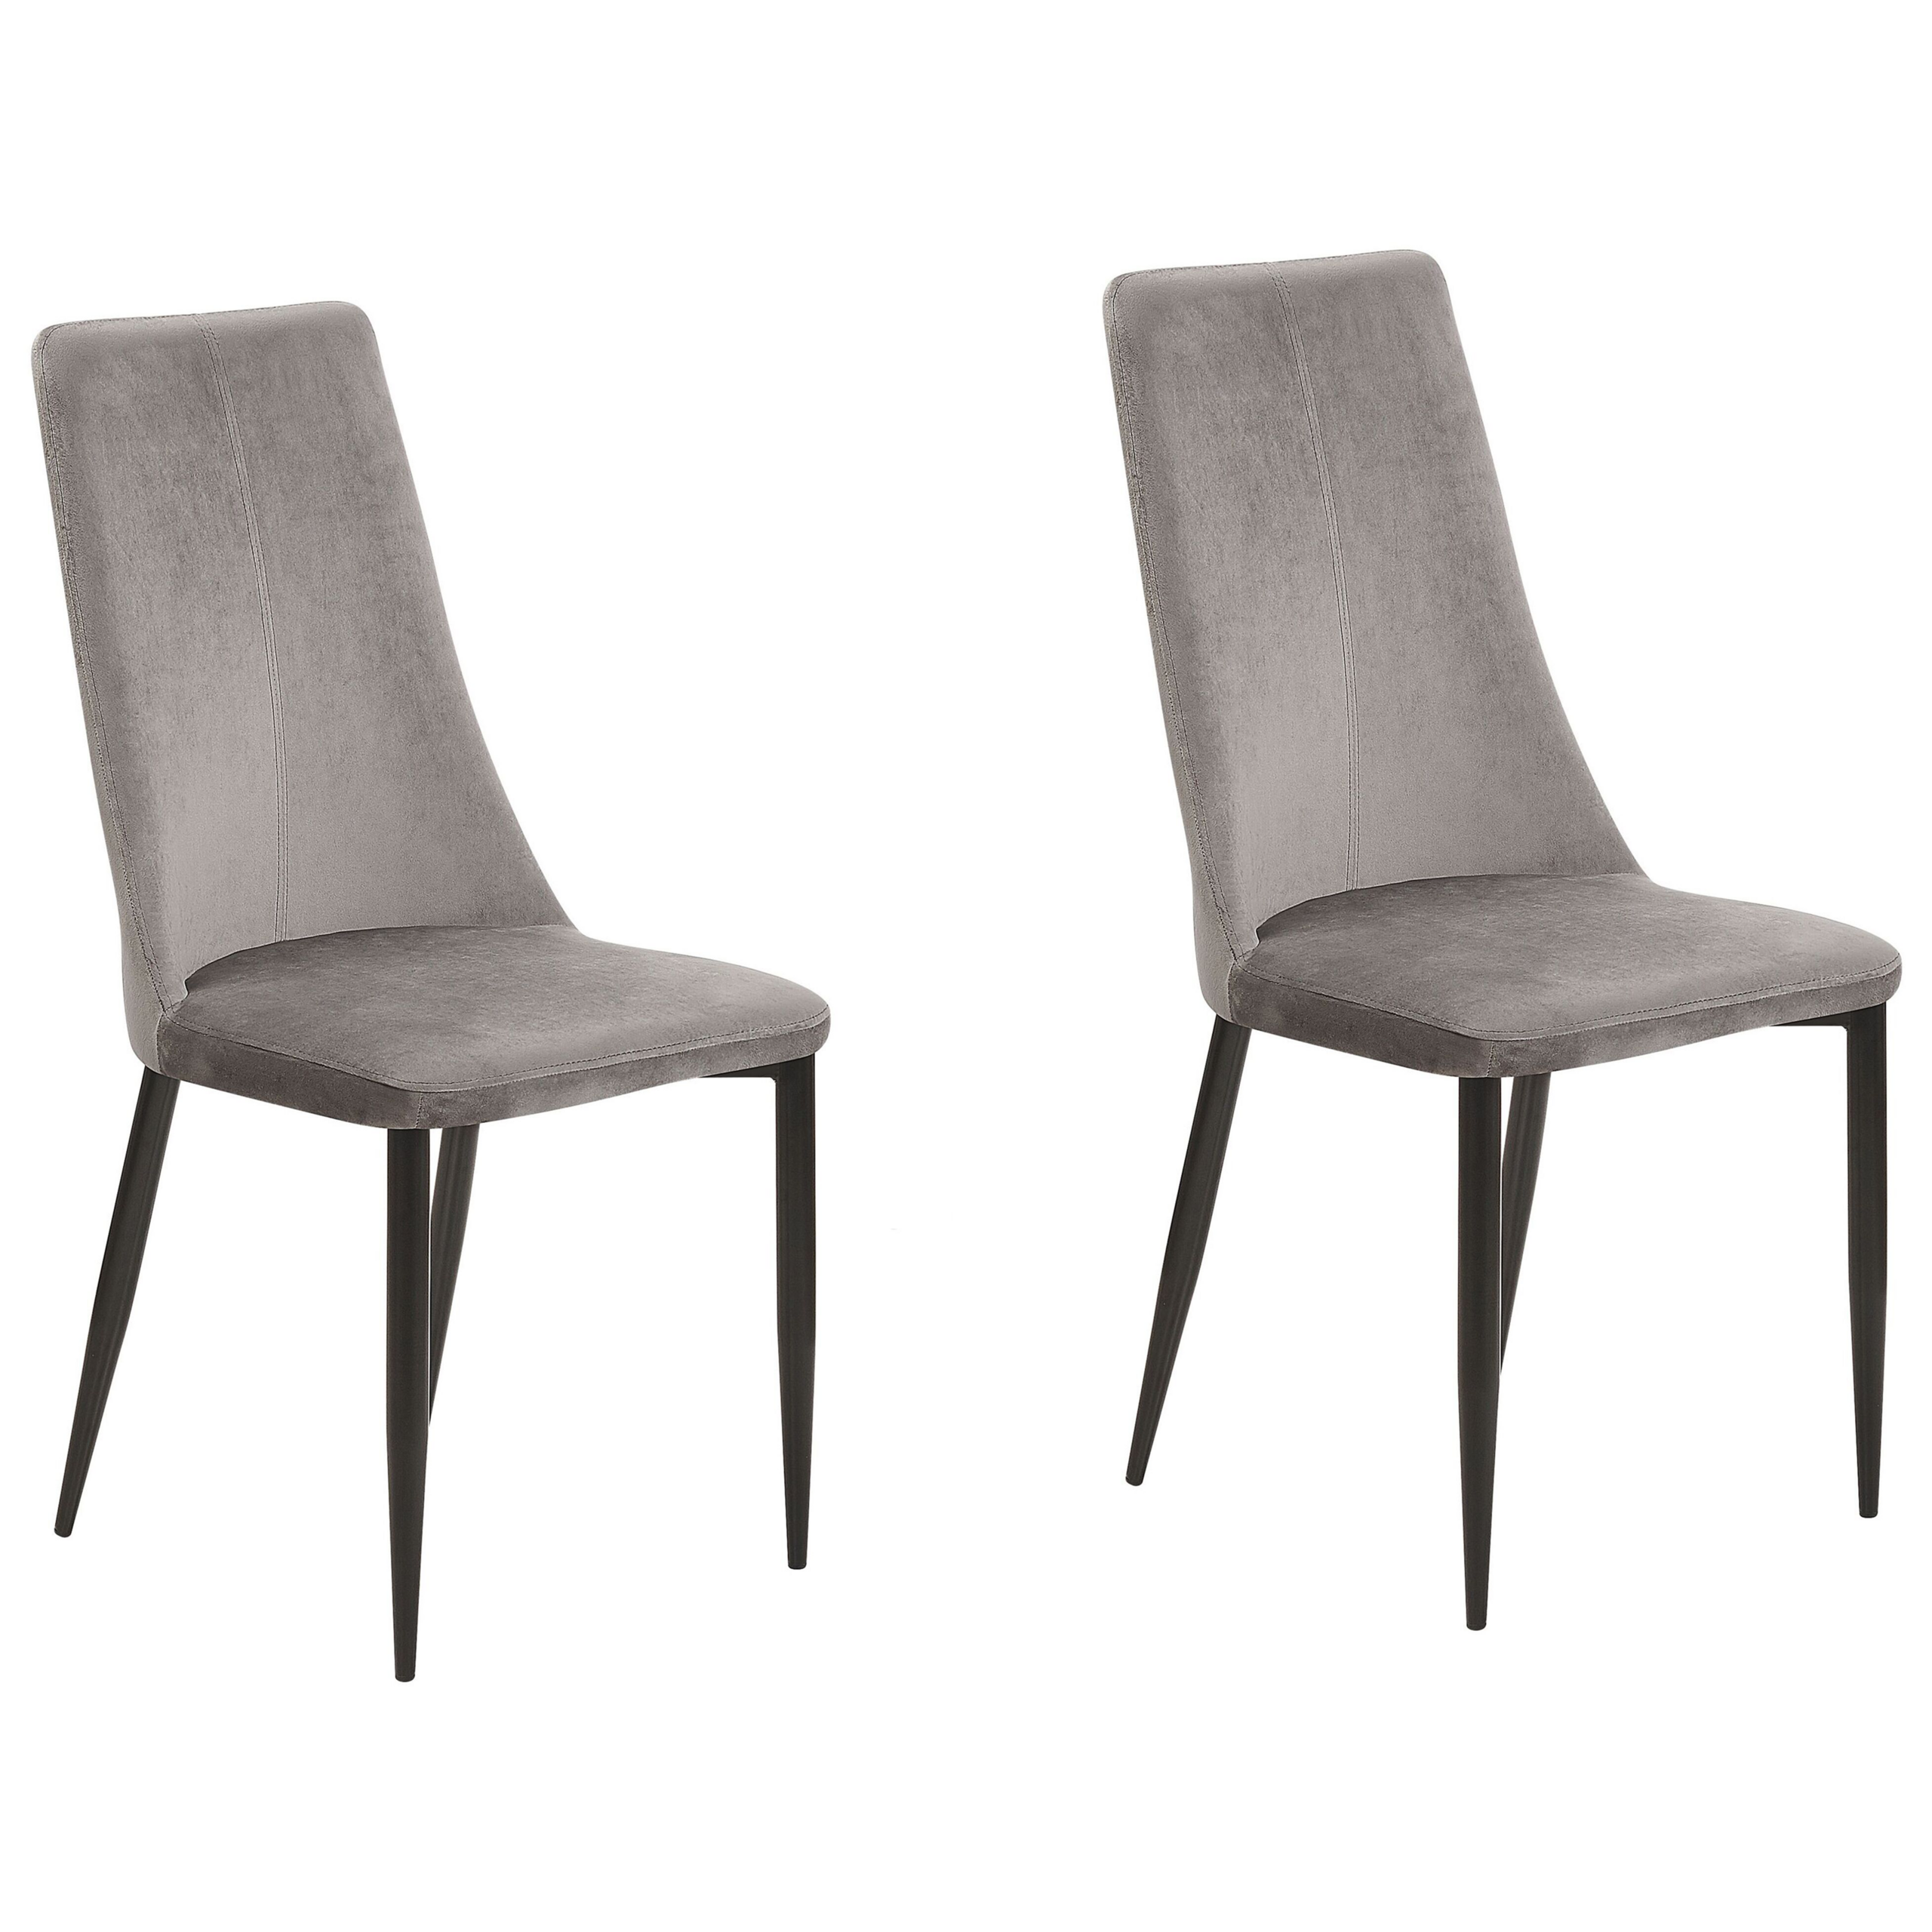 Beliani Set of 2 Dining Chairs Grey Velvet Upholstered Seat High Back